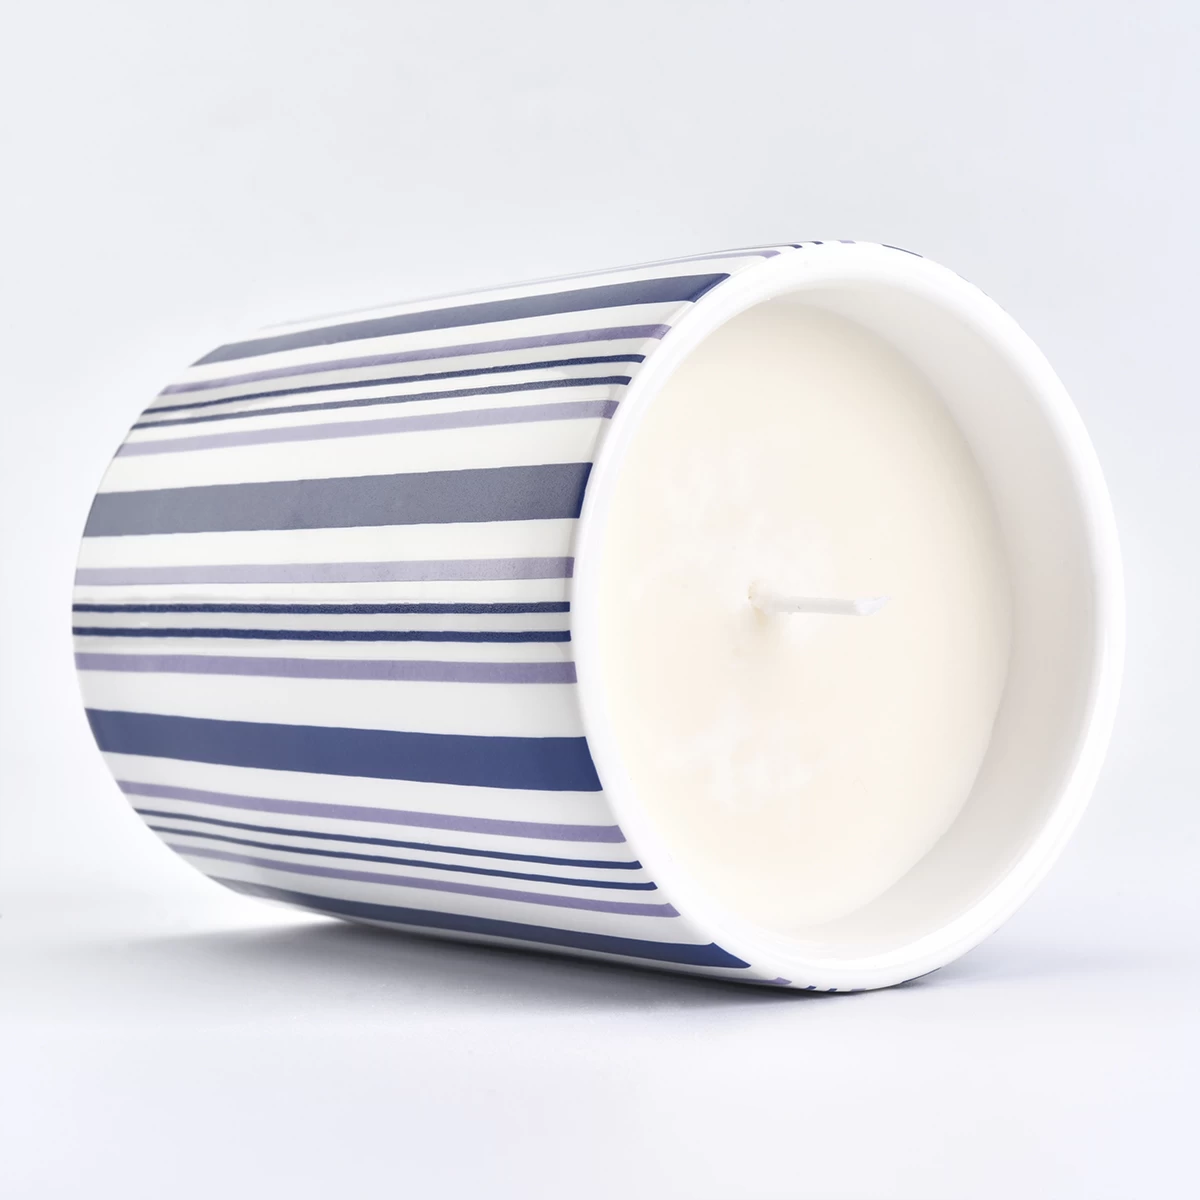 ceramic candle jar with straight stripes 12 oz